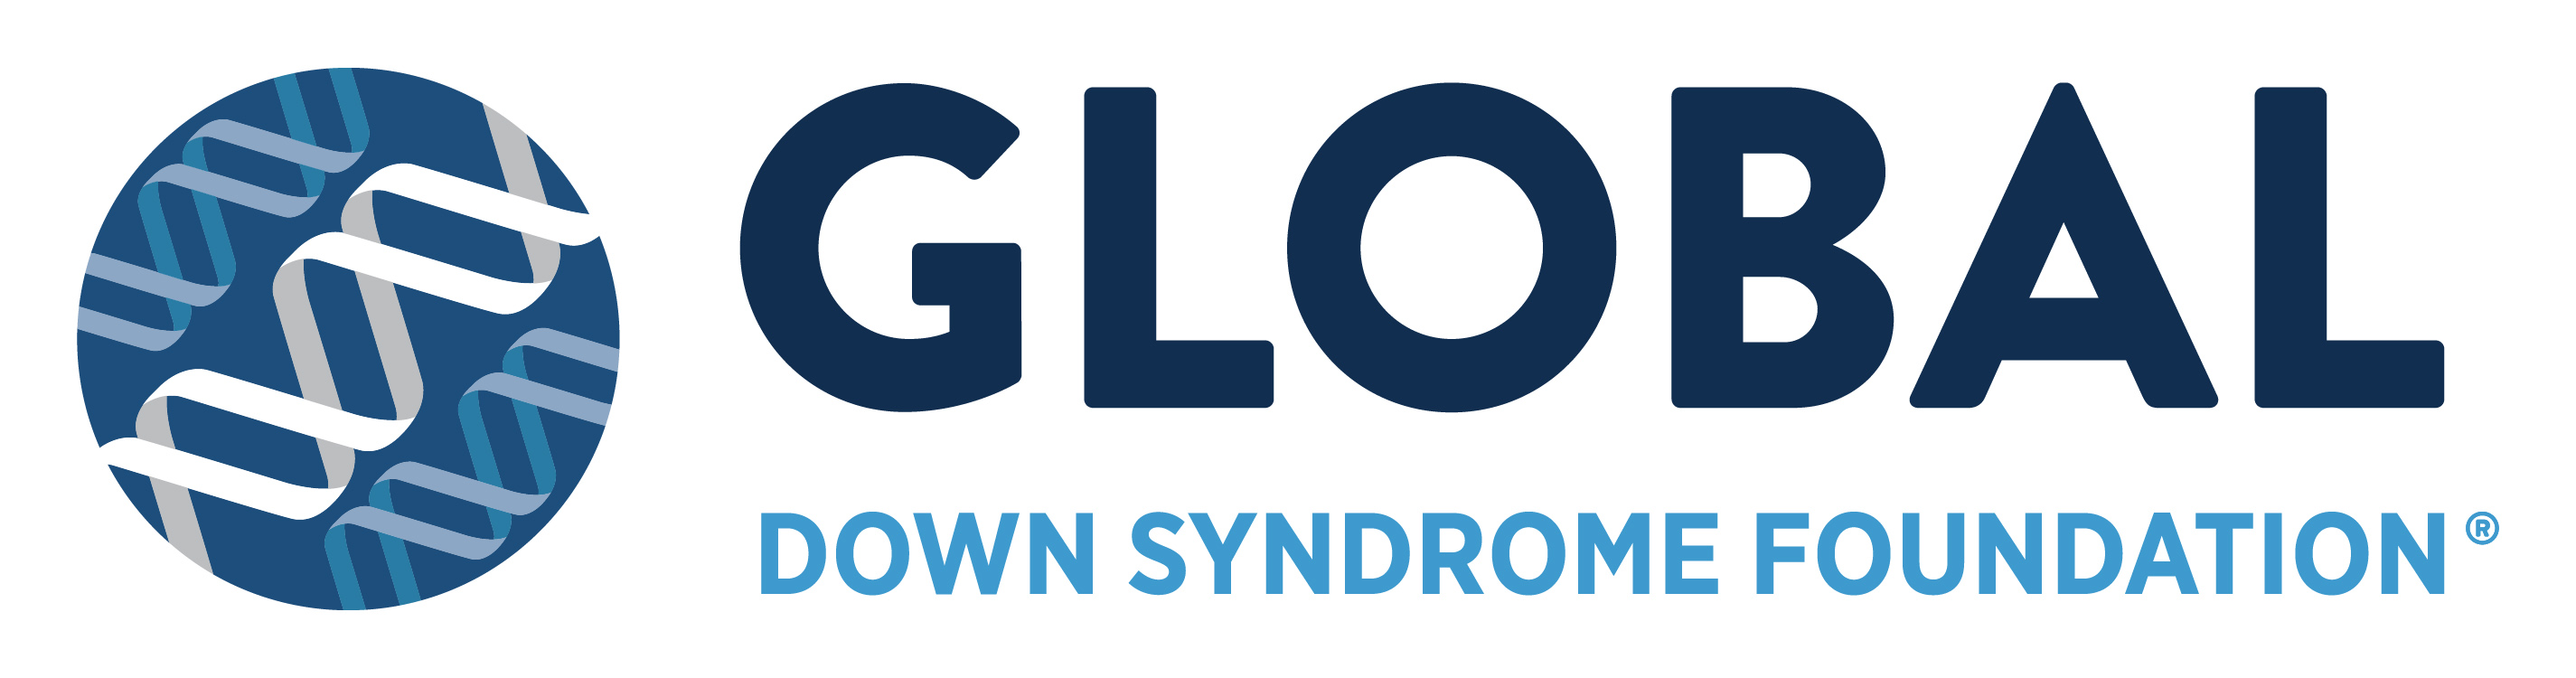 Down Syndrome World - Logo - https://s41078.pcdn.co/wp-content/uploads/2018/11/GDSF_FULL-COLOR-HORIZONTAL-PRIMARY-LOGO-RGB.jpg